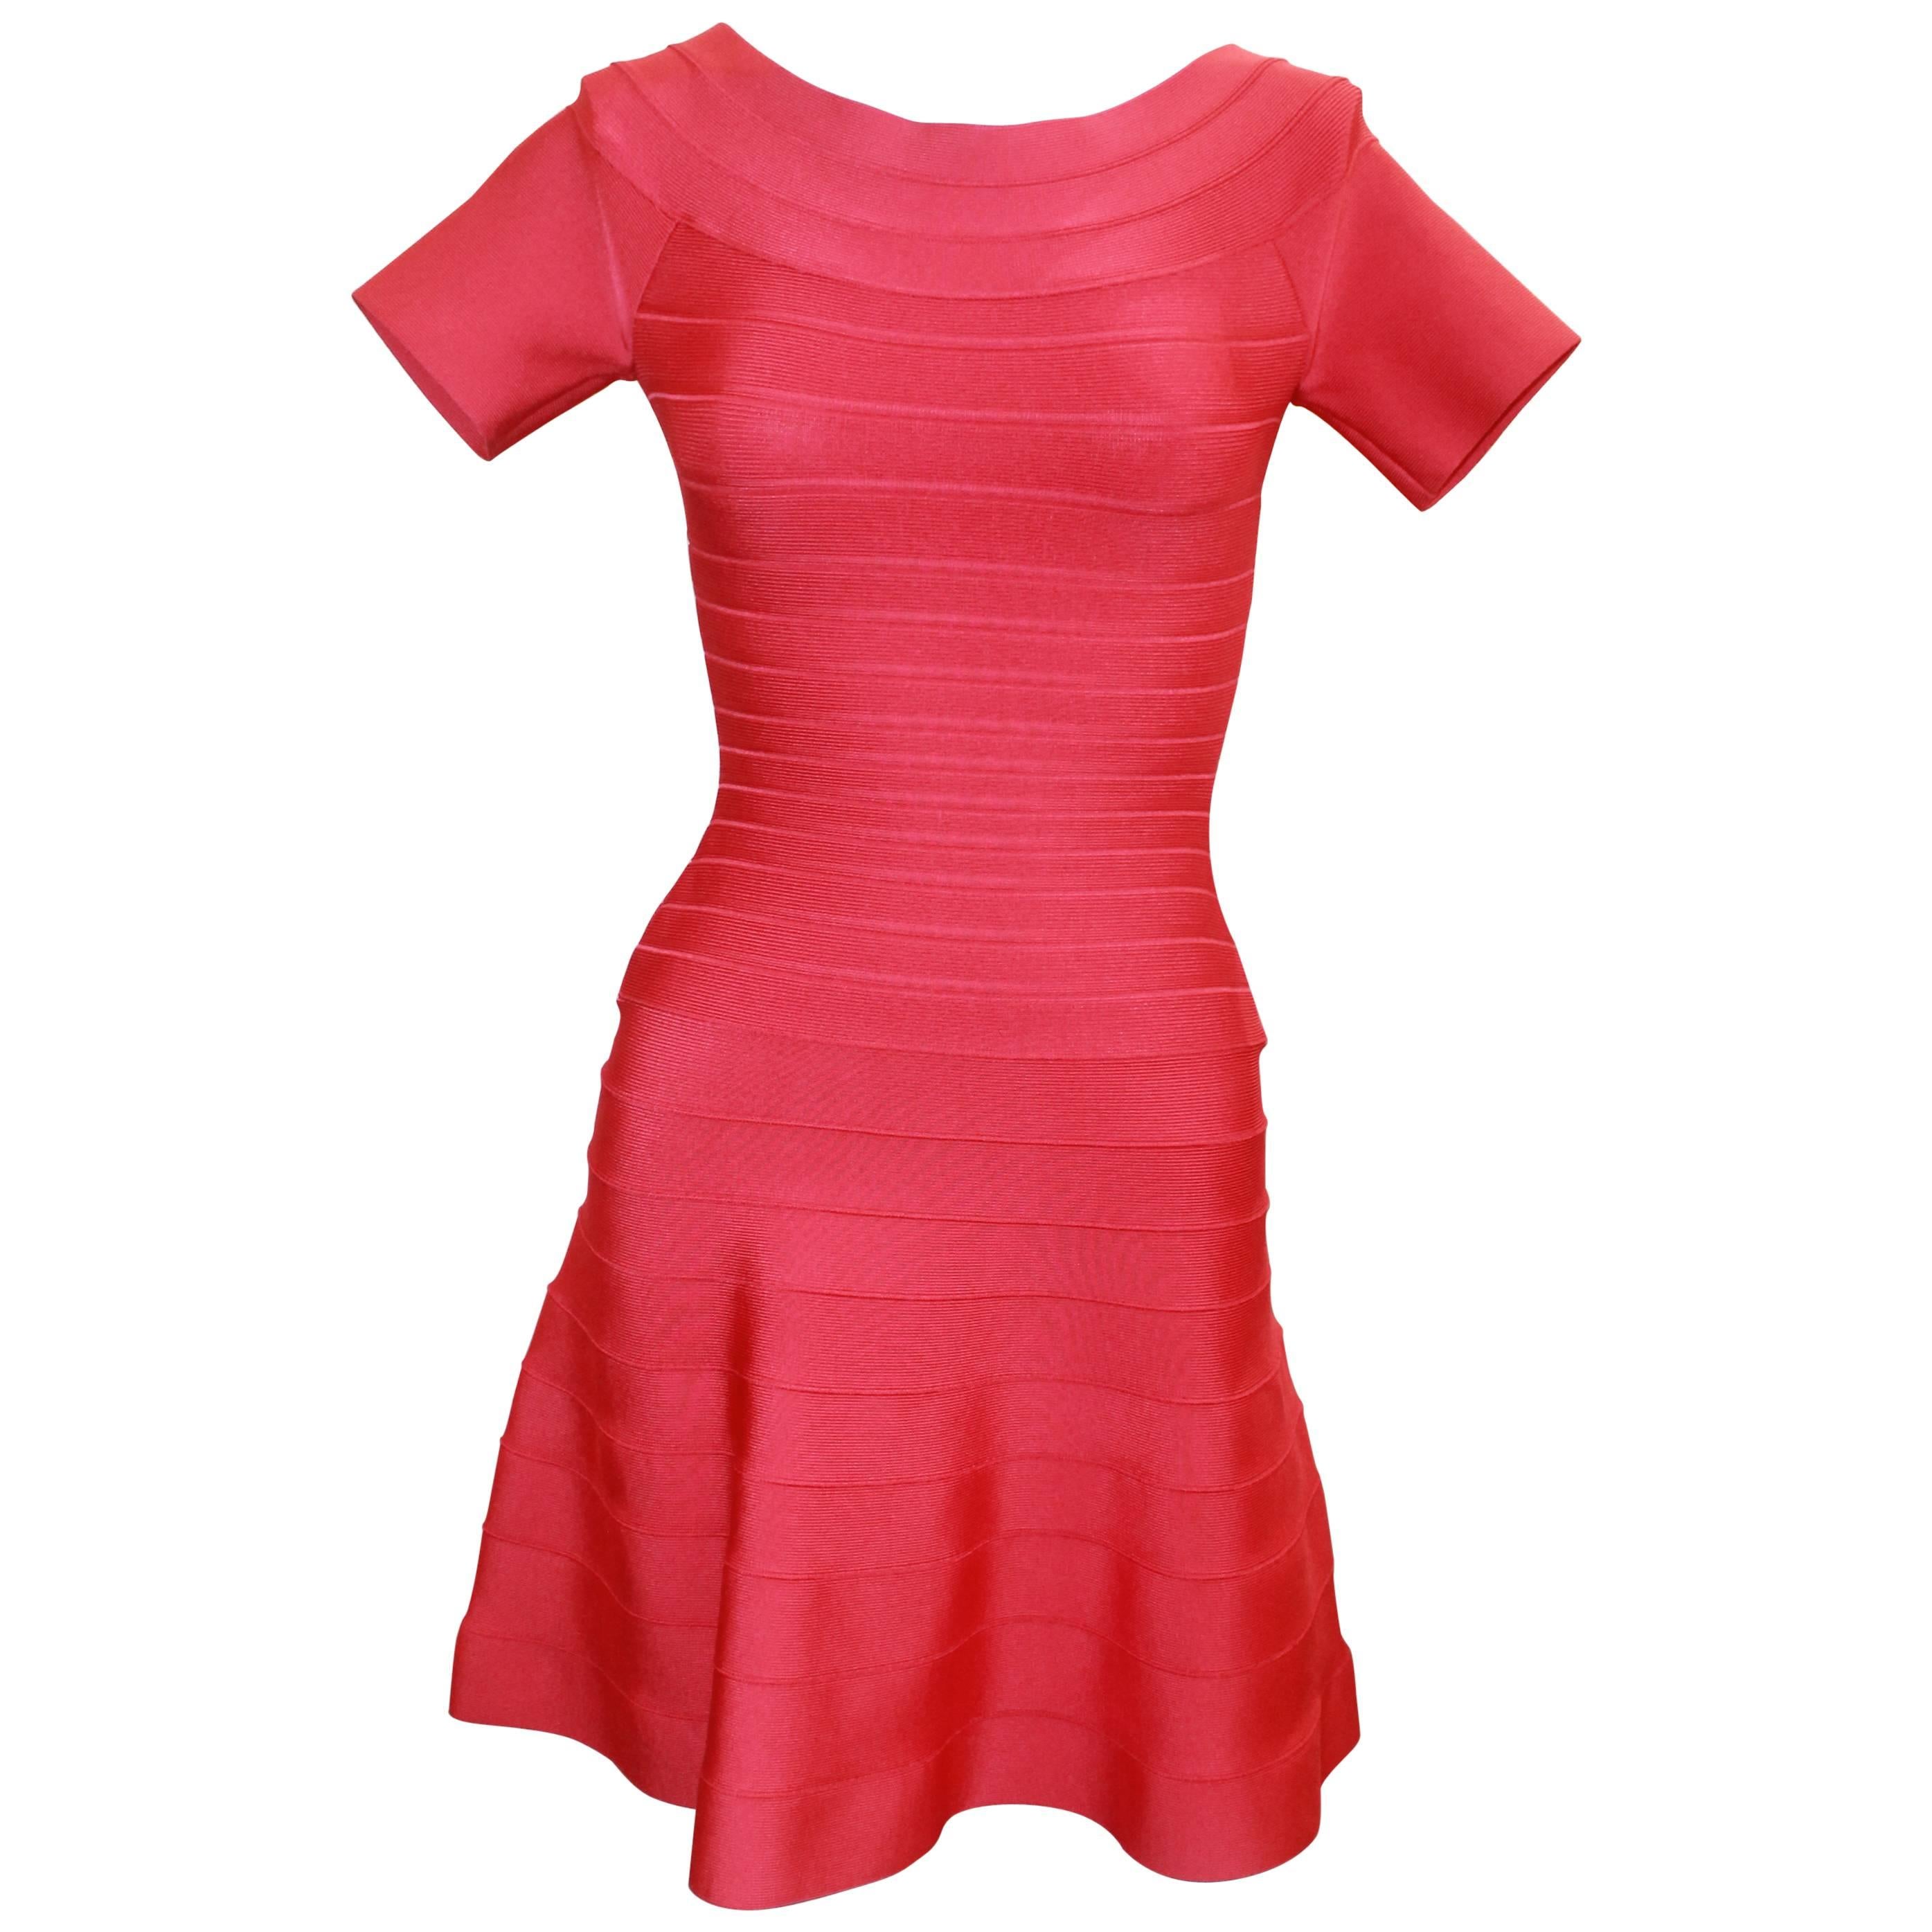 Herve Leger Raspberry Stretch Short Sleeve Dress - XS